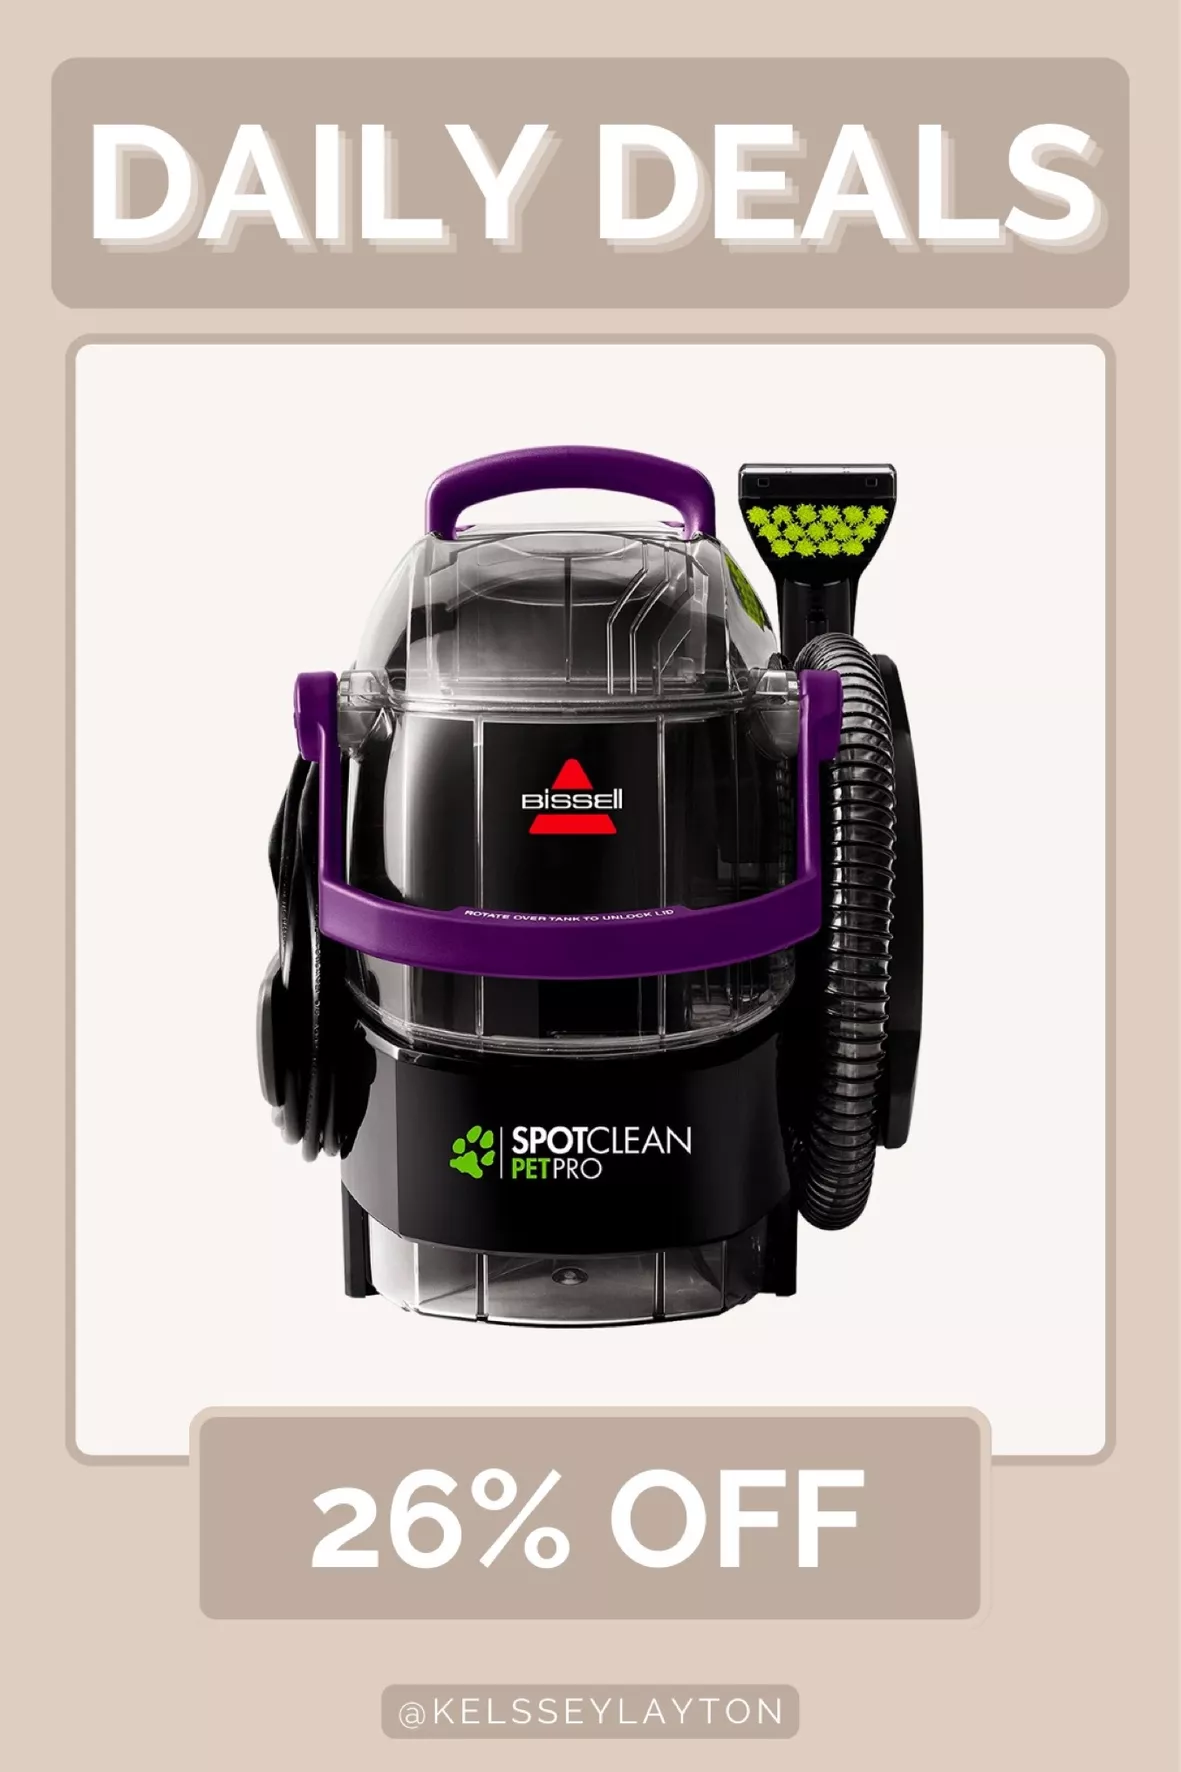 BISSELL SpotClean Pet Pro Portable Carpet Cleaner, 2458, Grapevine Purple,  Black